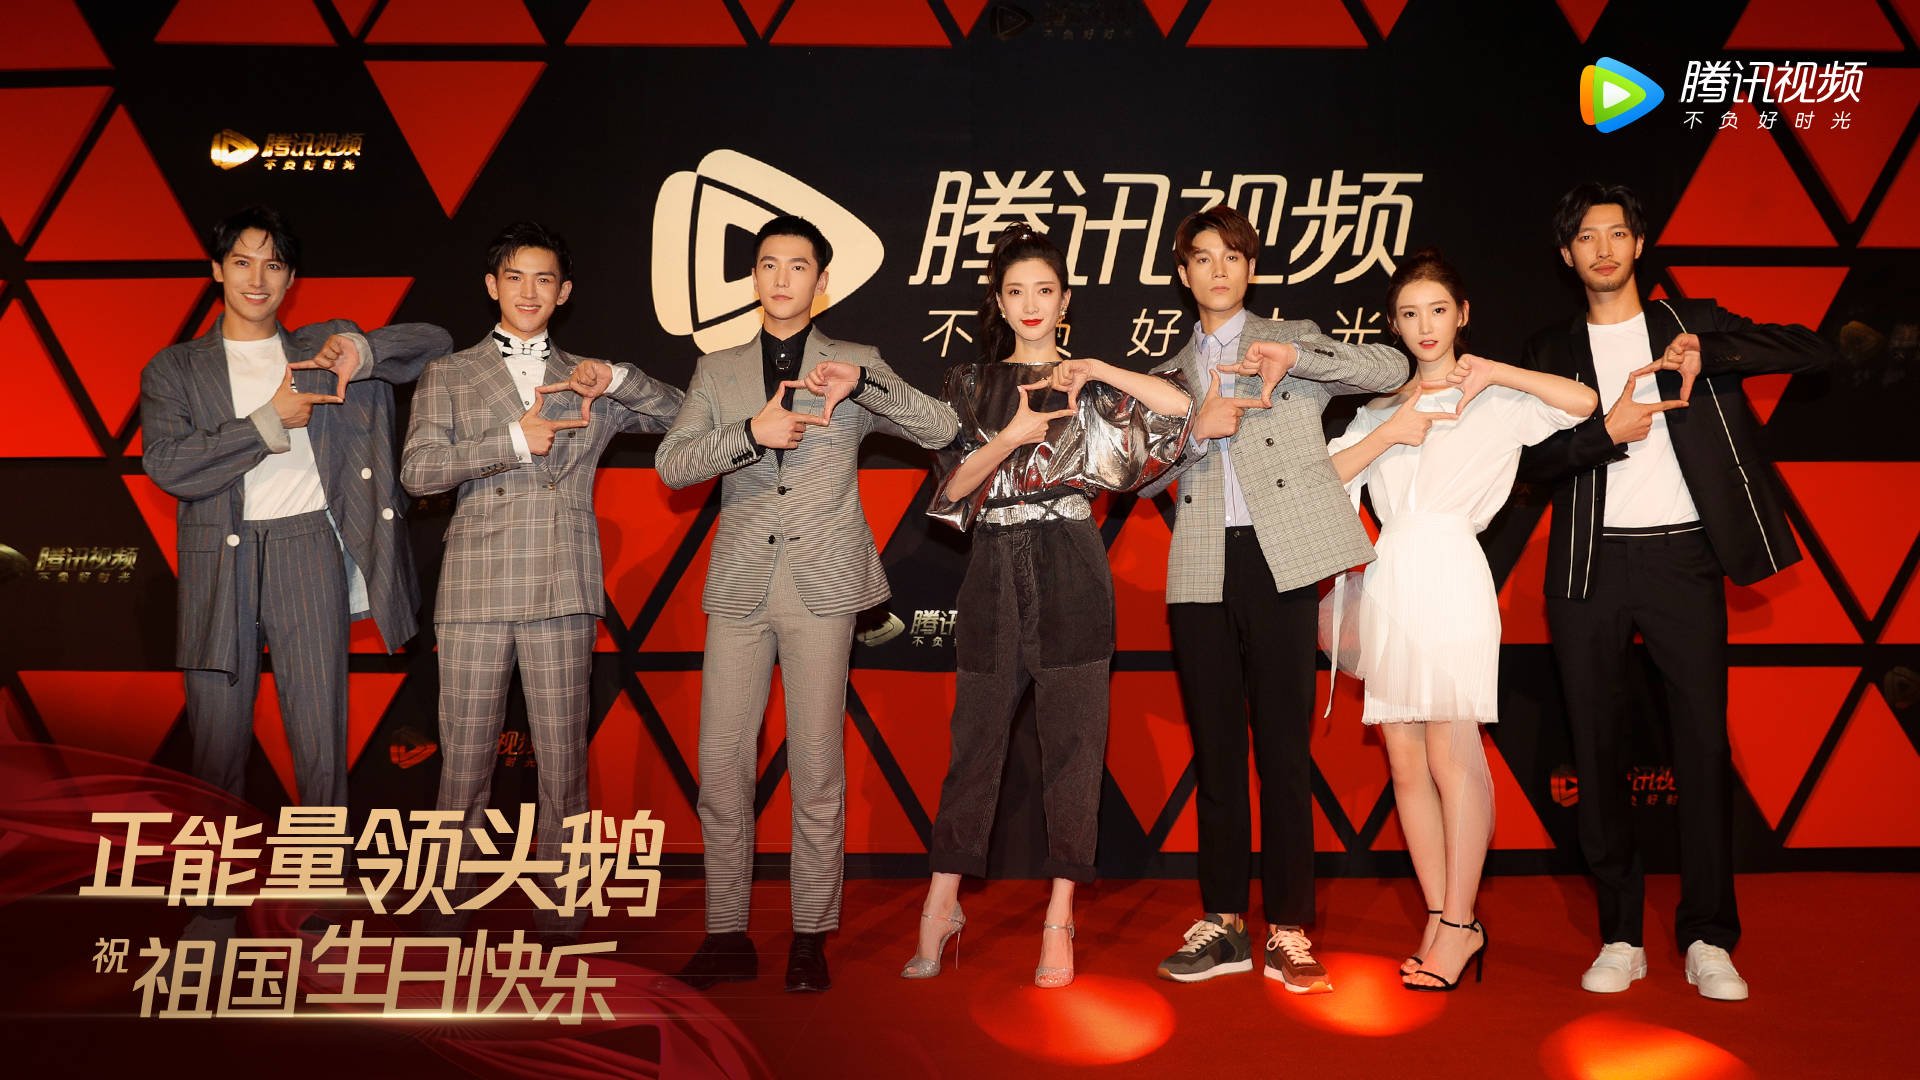 ❣YANG 杨洋 YANG ❣ on X: THE KING'S AVATAR Meet Team HAPPY #1 #yangyang  #yexiu #TheKingsAvatar  / X